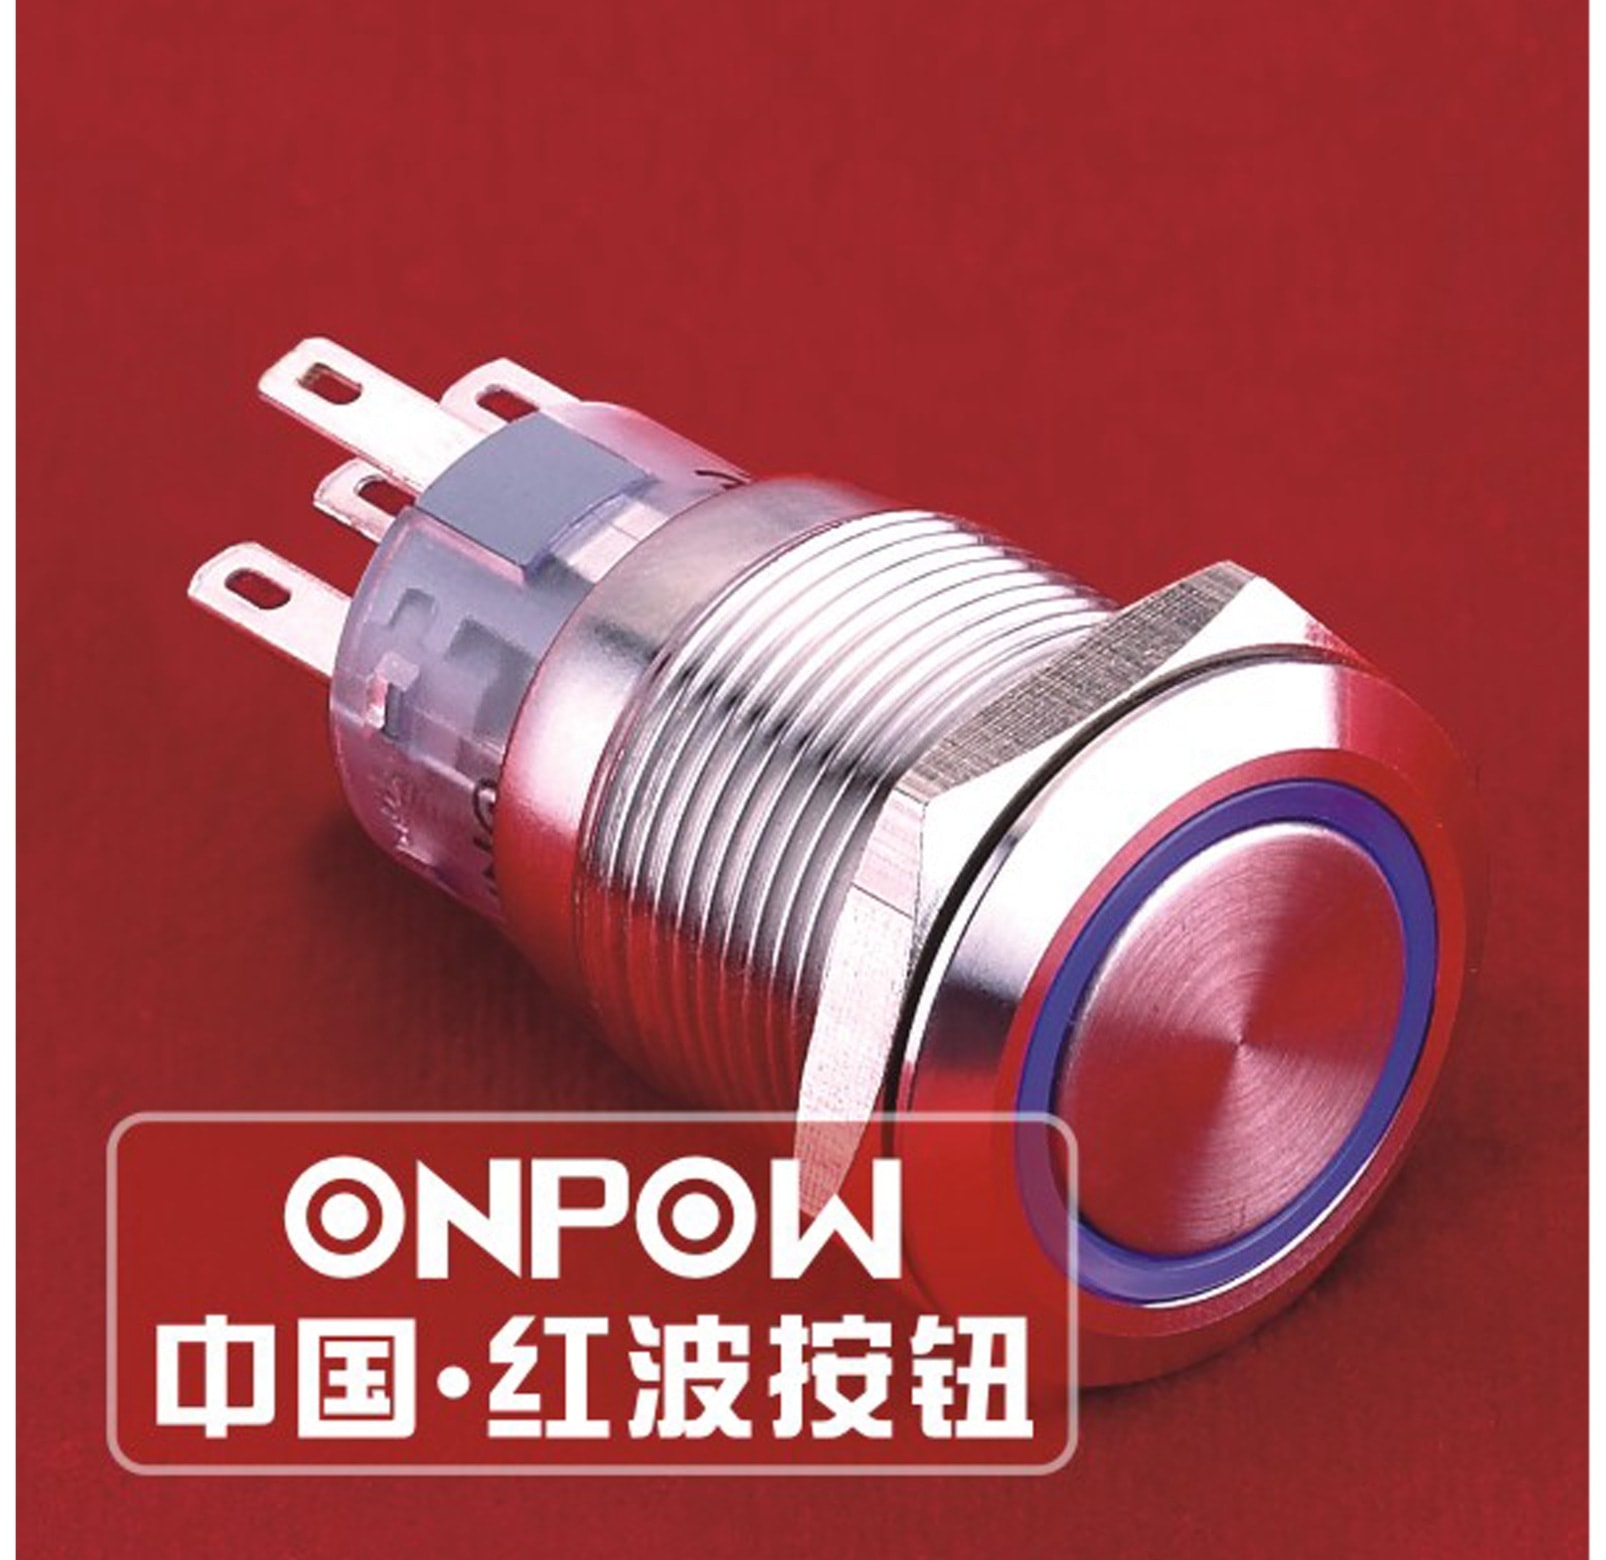 ONPOW Schalter, 24 V/DC, 1x Off/(On), Beleuchtung rot, Lötanschluss, flach rund, Edelstahl, 19 mm